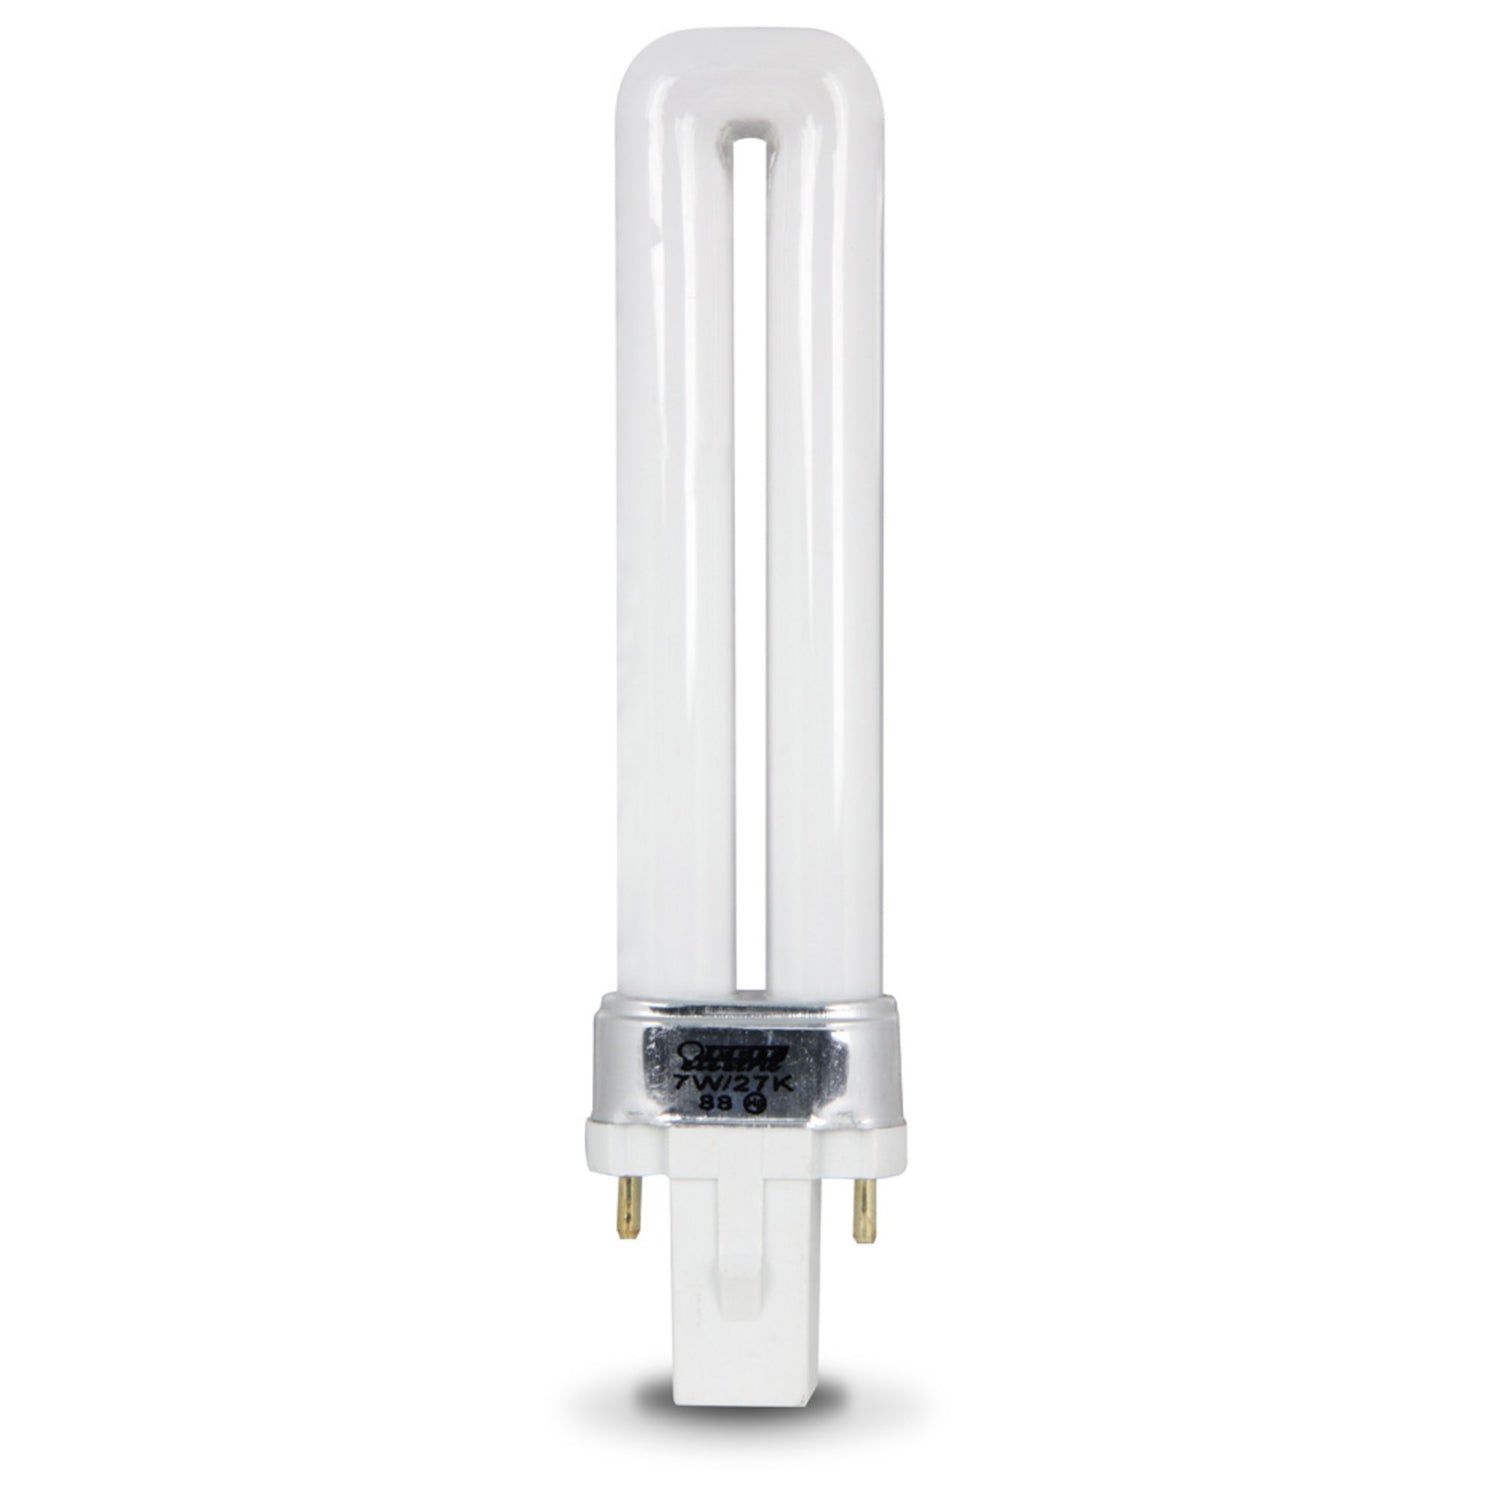 7W Soft White (2700K) PL G23 Base Non-Dimmable CFL Light Bulb